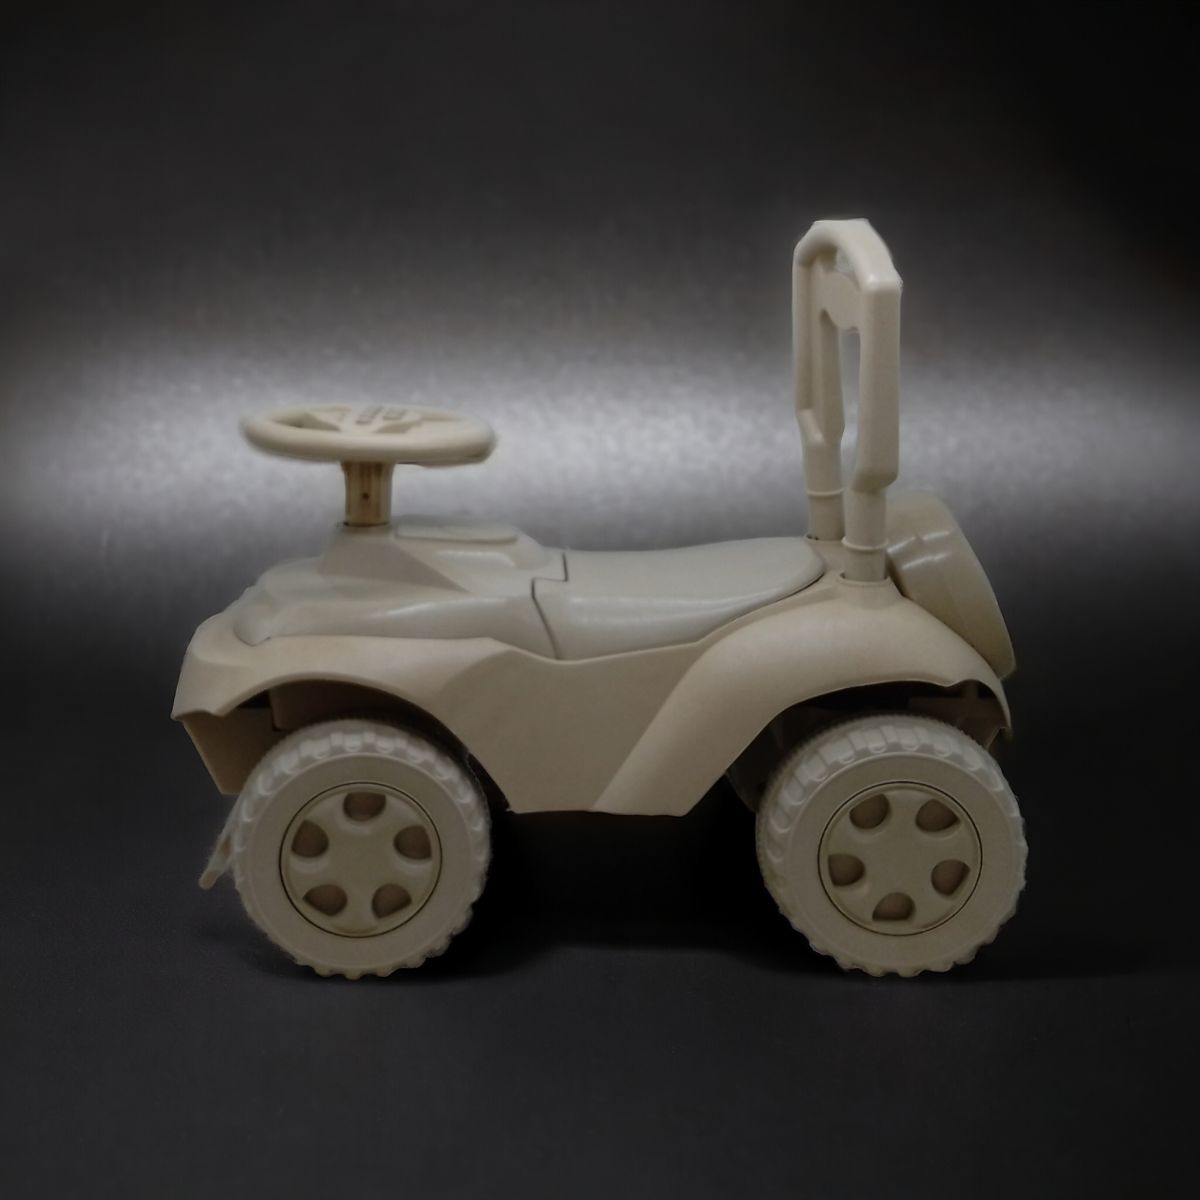 Іграшка дитяча каталка-толокар "Машинка", еко серія, музична (укр)